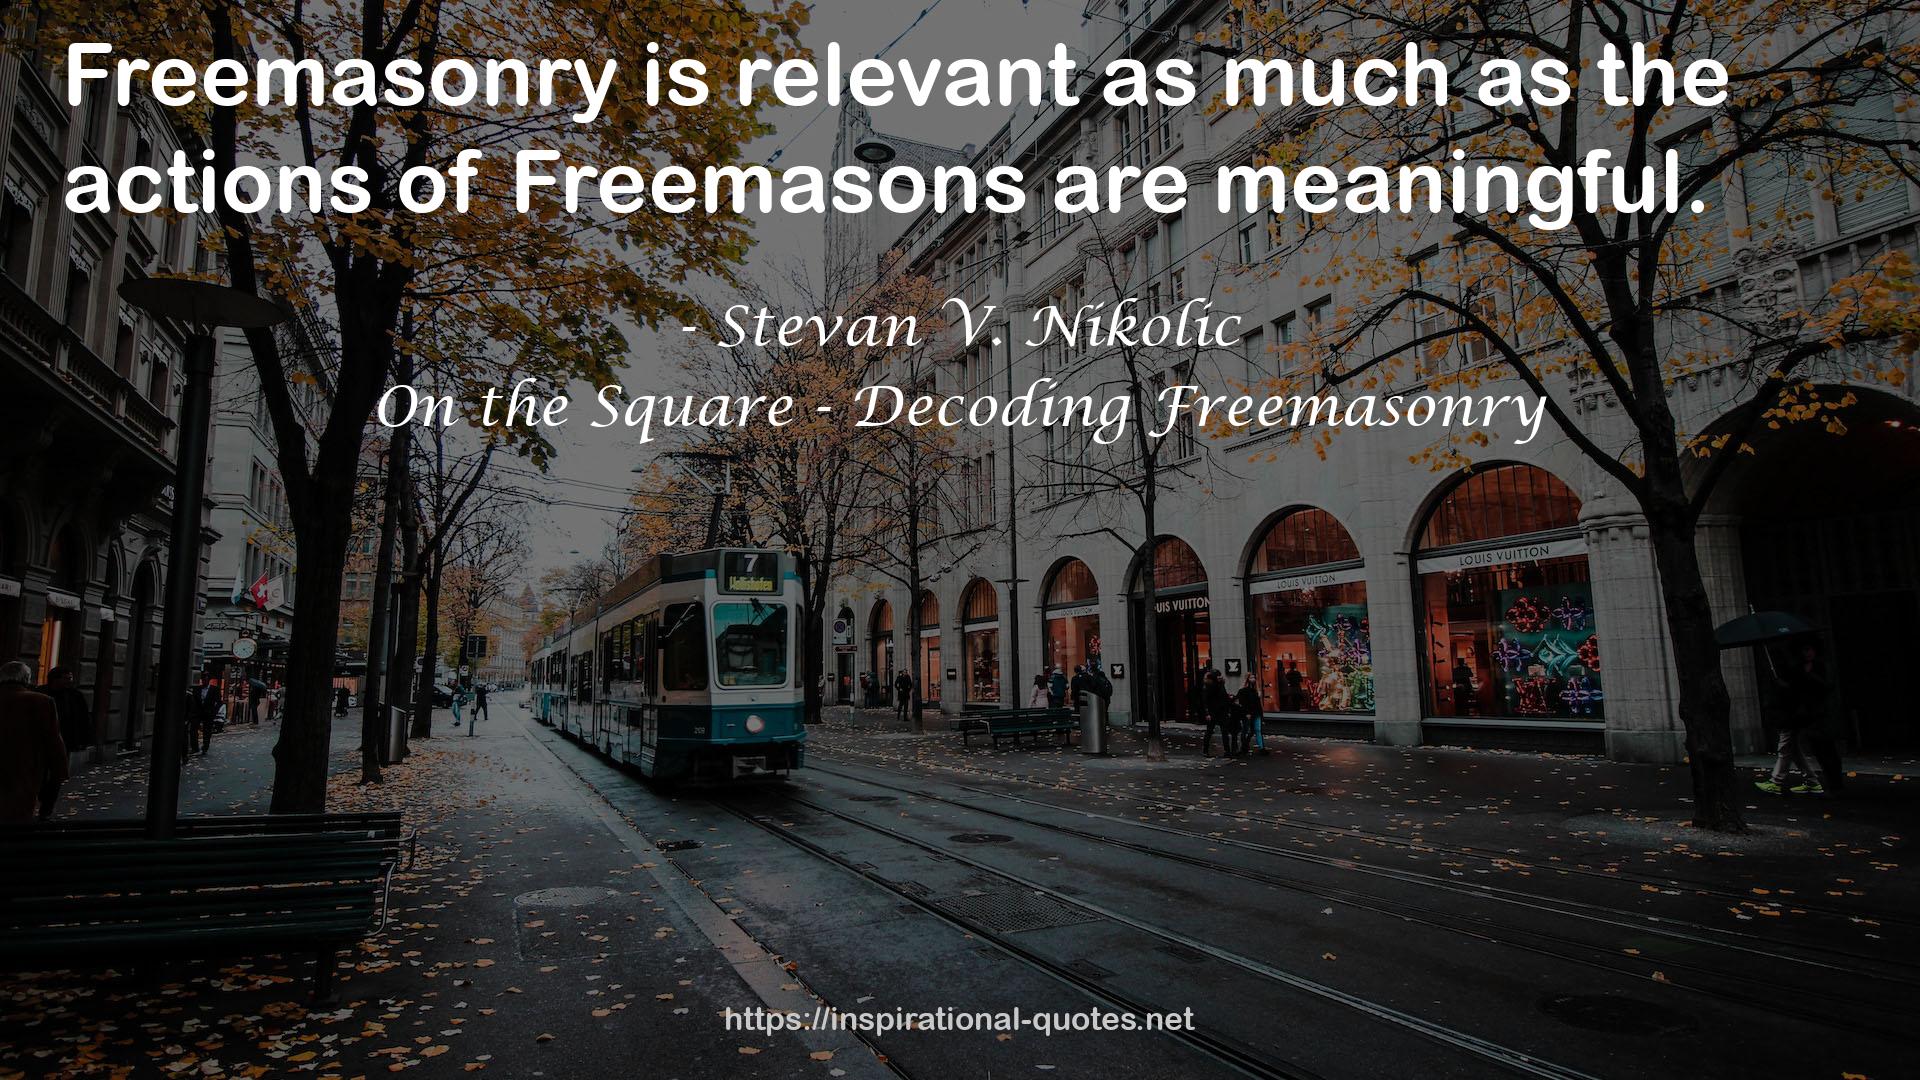 On the Square - Decoding Freemasonry QUOTES